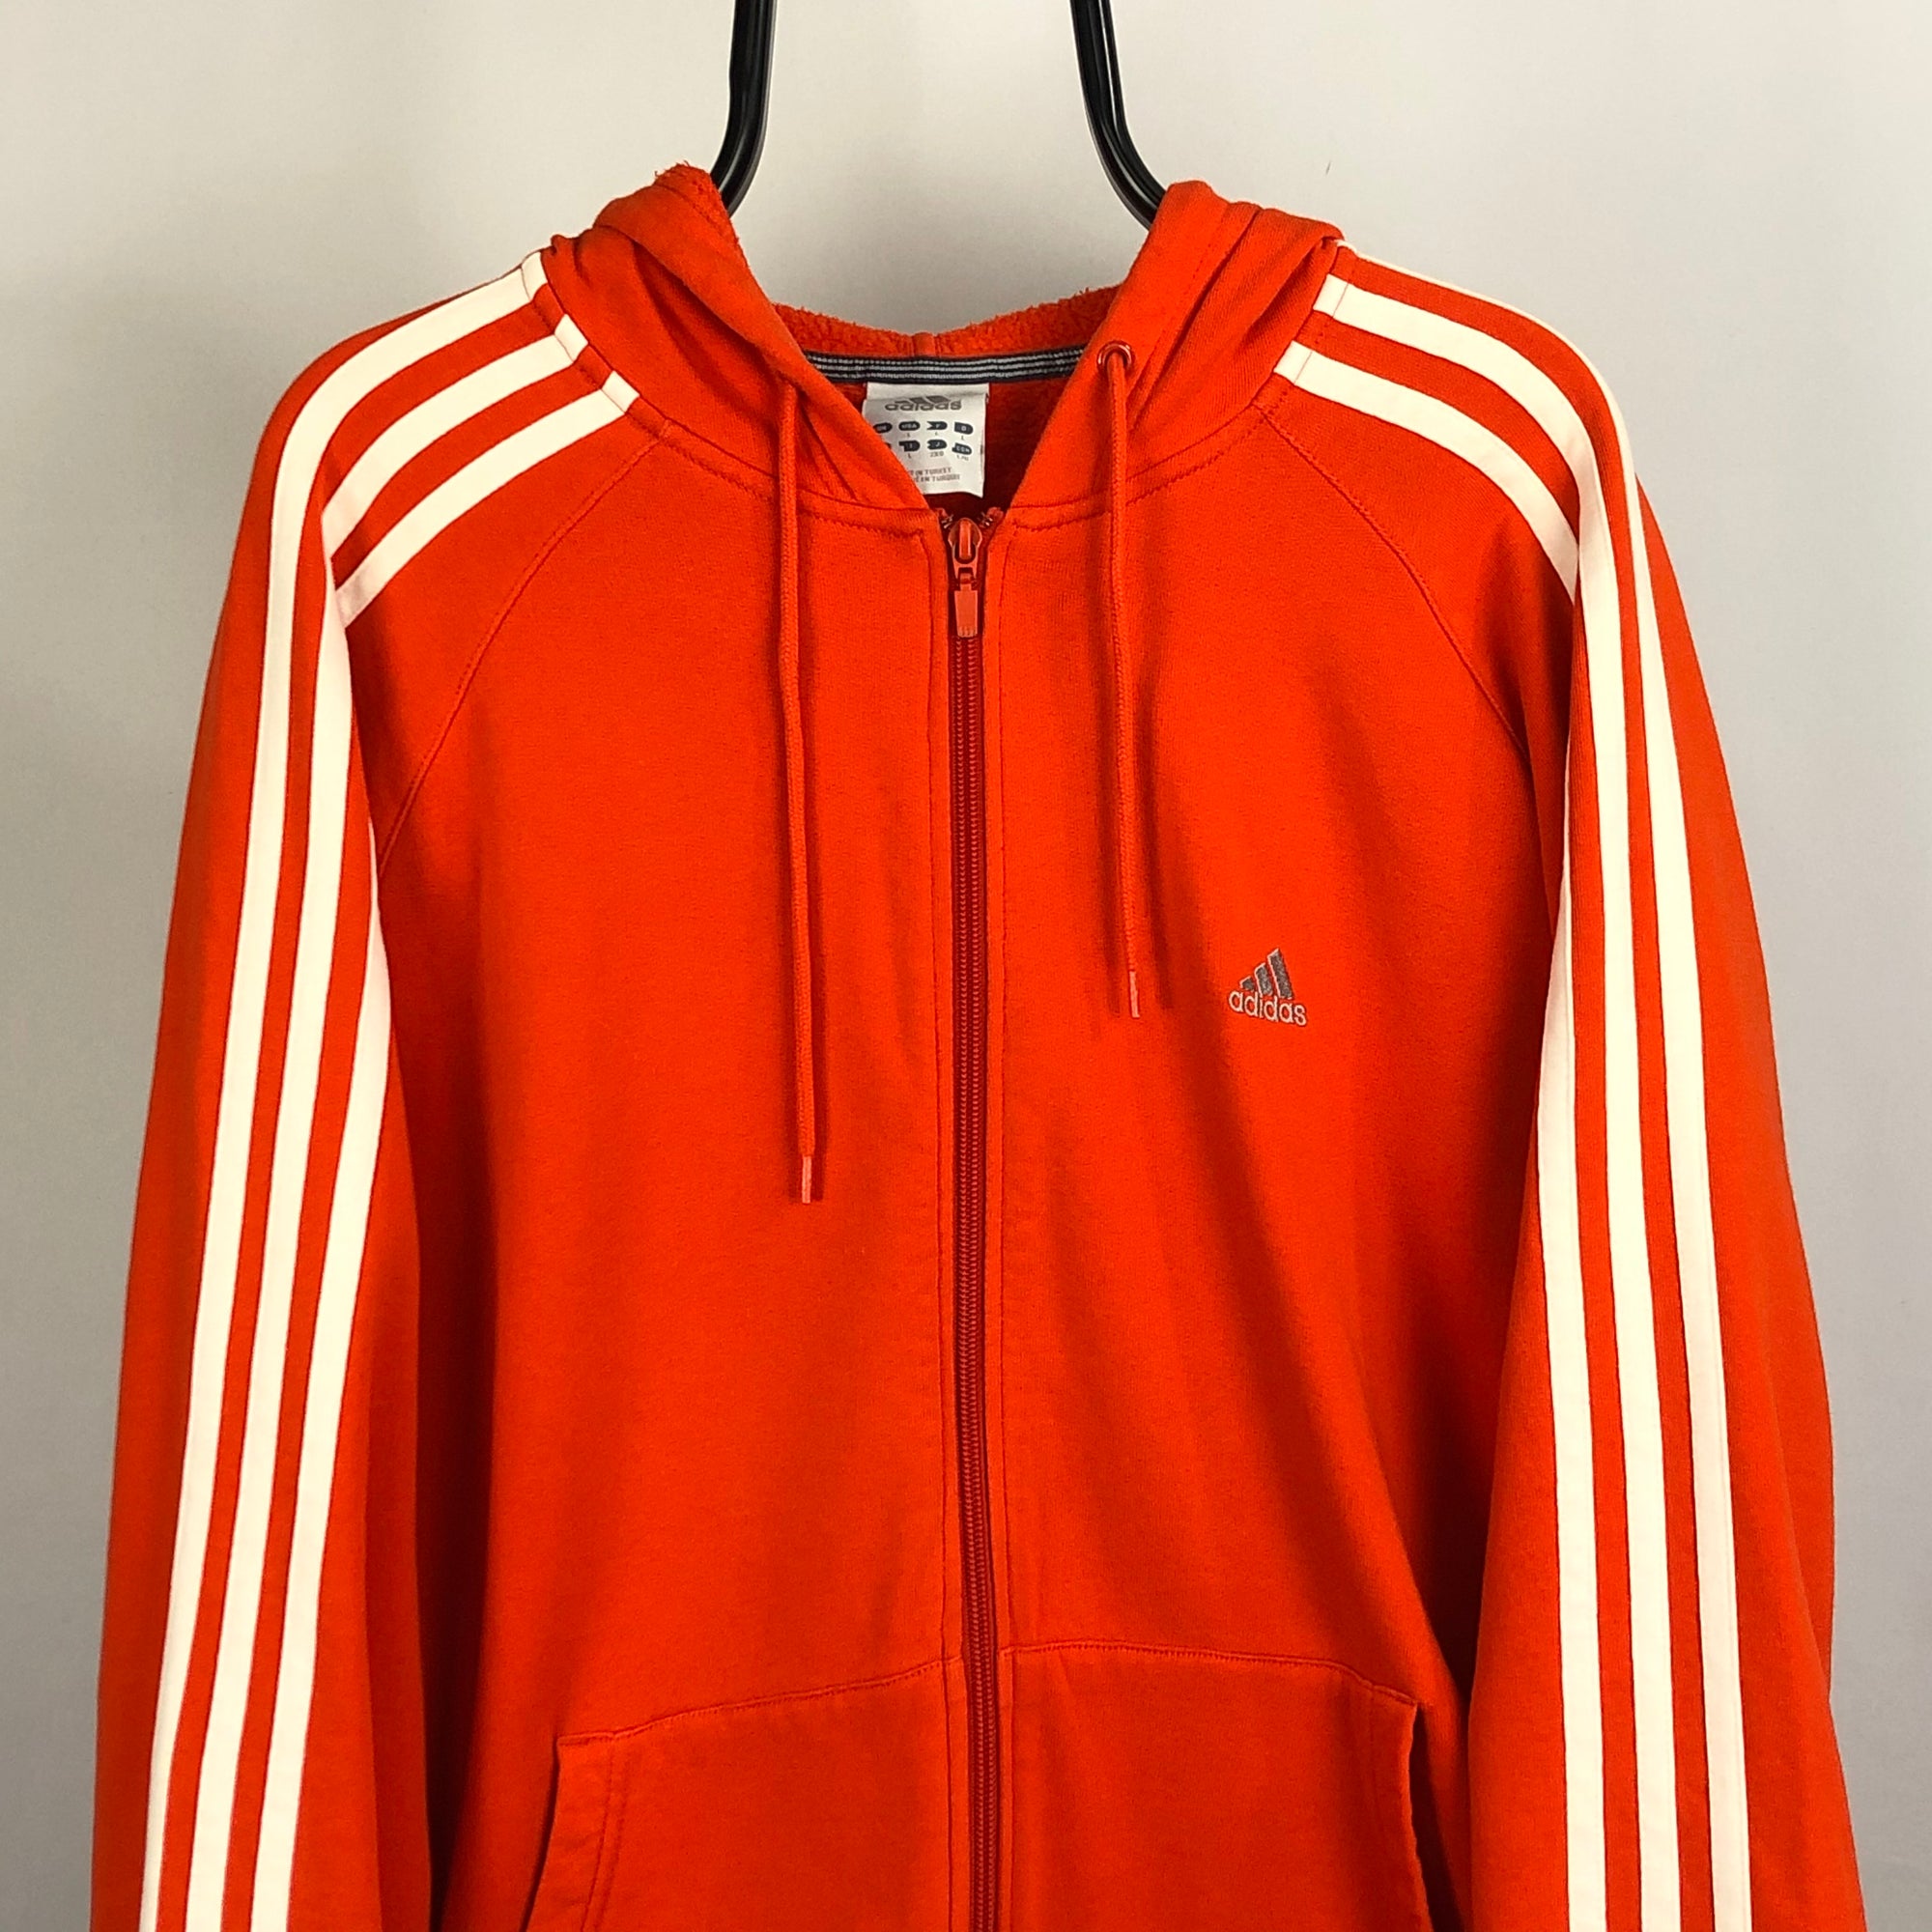 Adidas Embroidered Small Logo Zip Hoodie in Orange - Men's Large/Women's XL